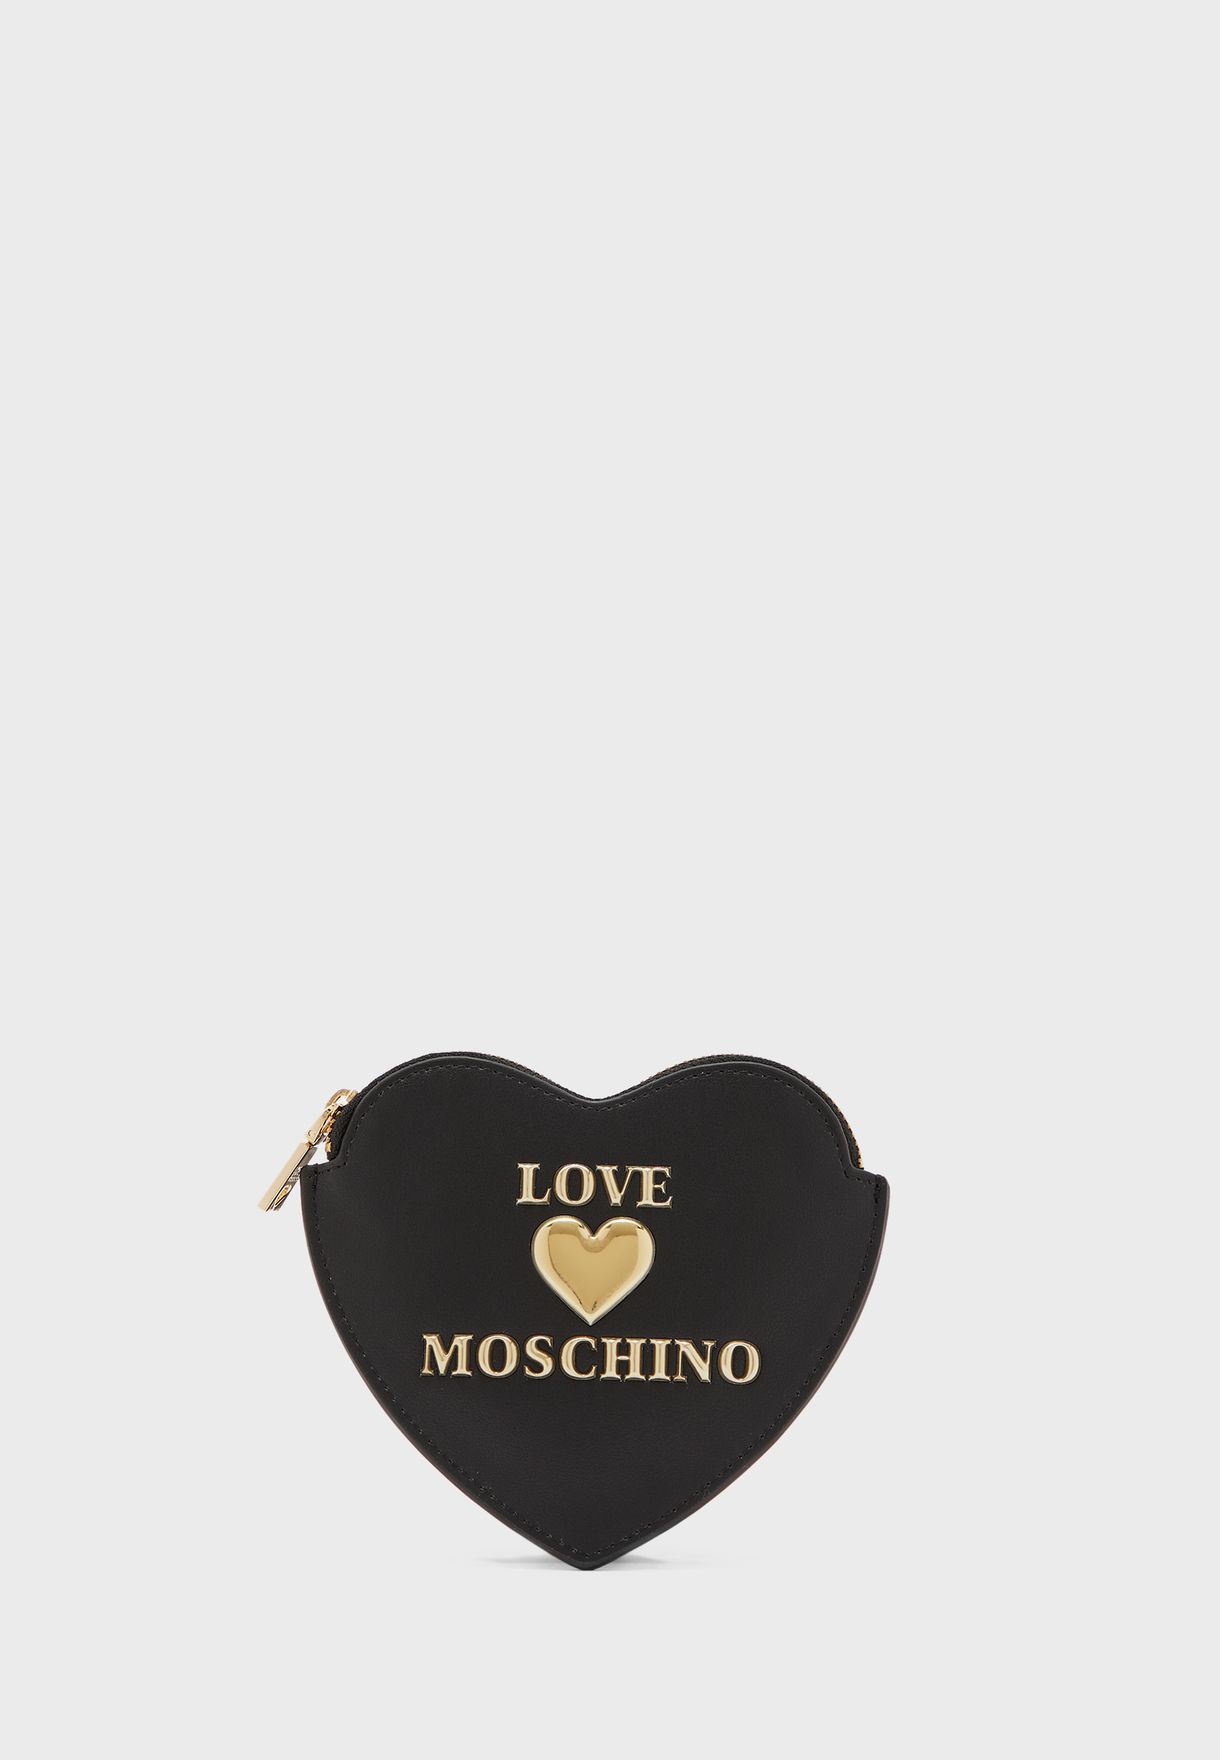 moschino heart shaped bag